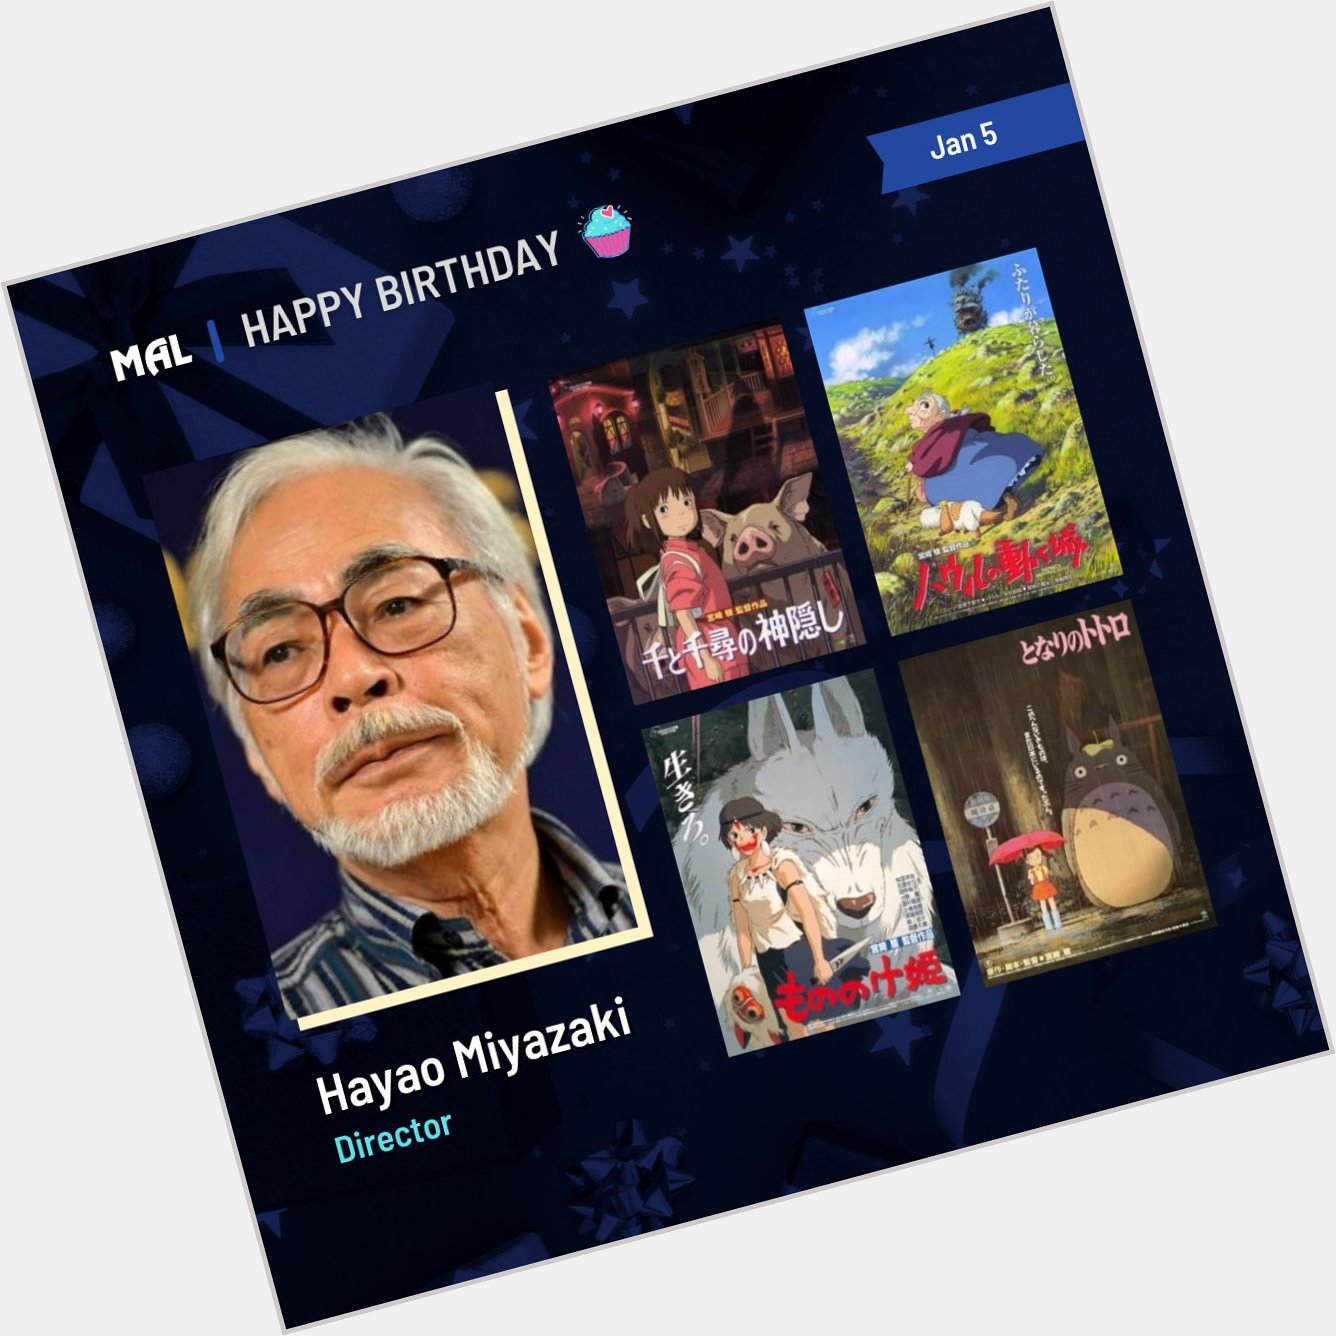 Happy Birthday to Hayao Miyazaki! Full profile:  